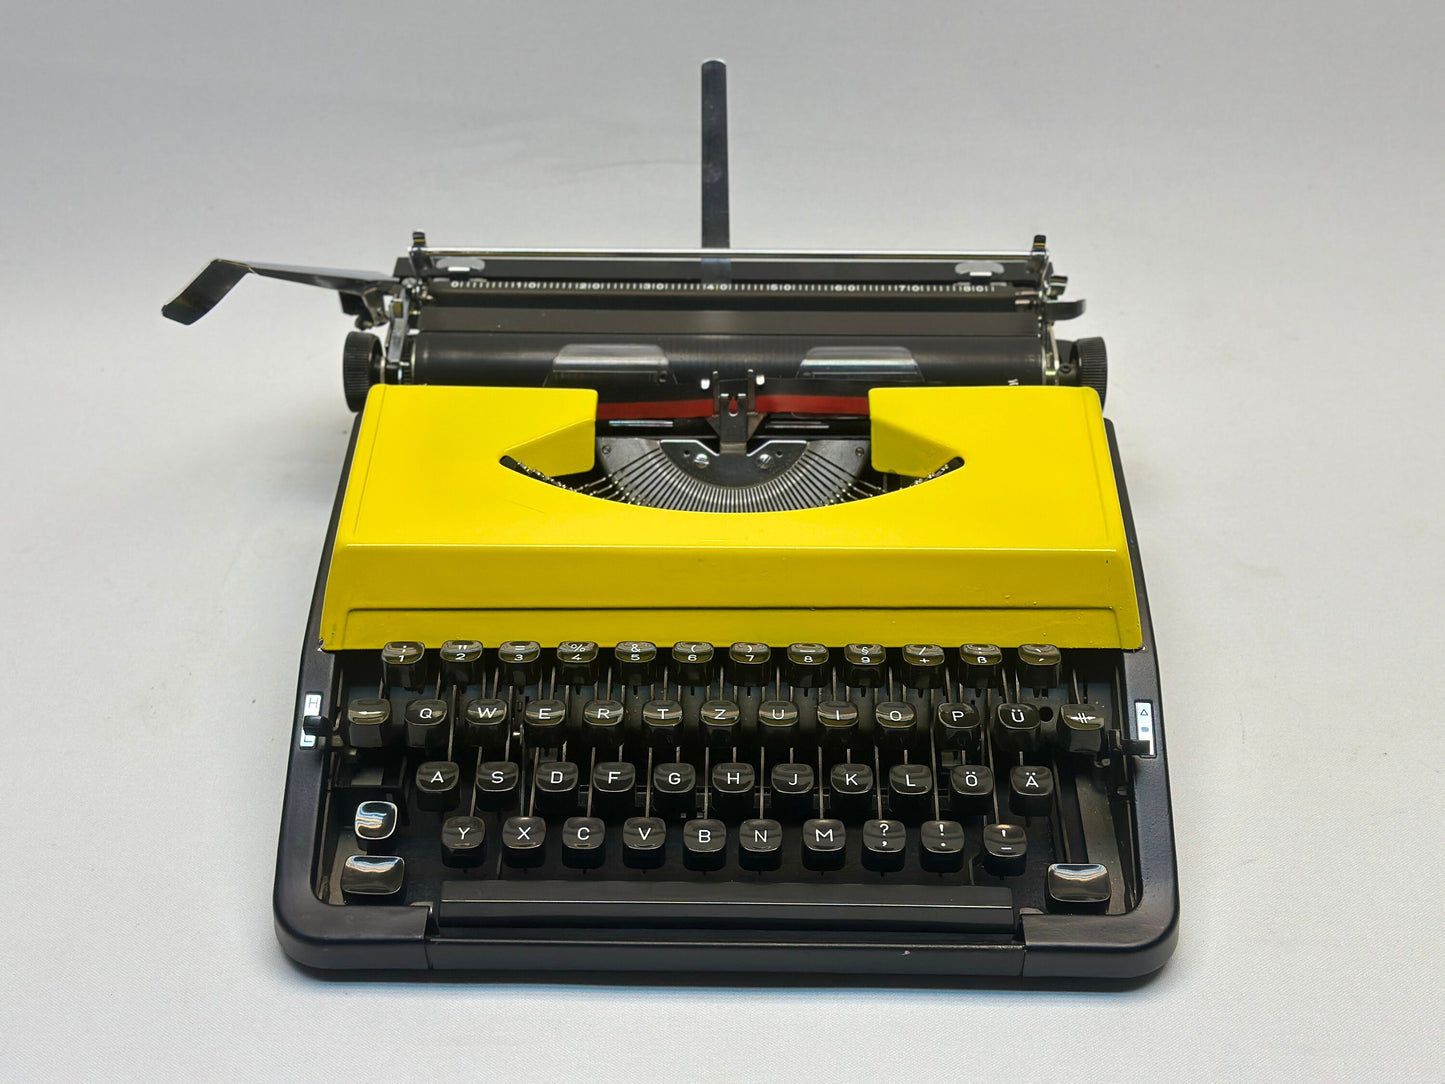 German-Made Adler Triumph Typewriter with QWERTZ Keyboard, Yellow Cover, Black Keys - Antique Beauty, Fully Functional Manual Typewriter